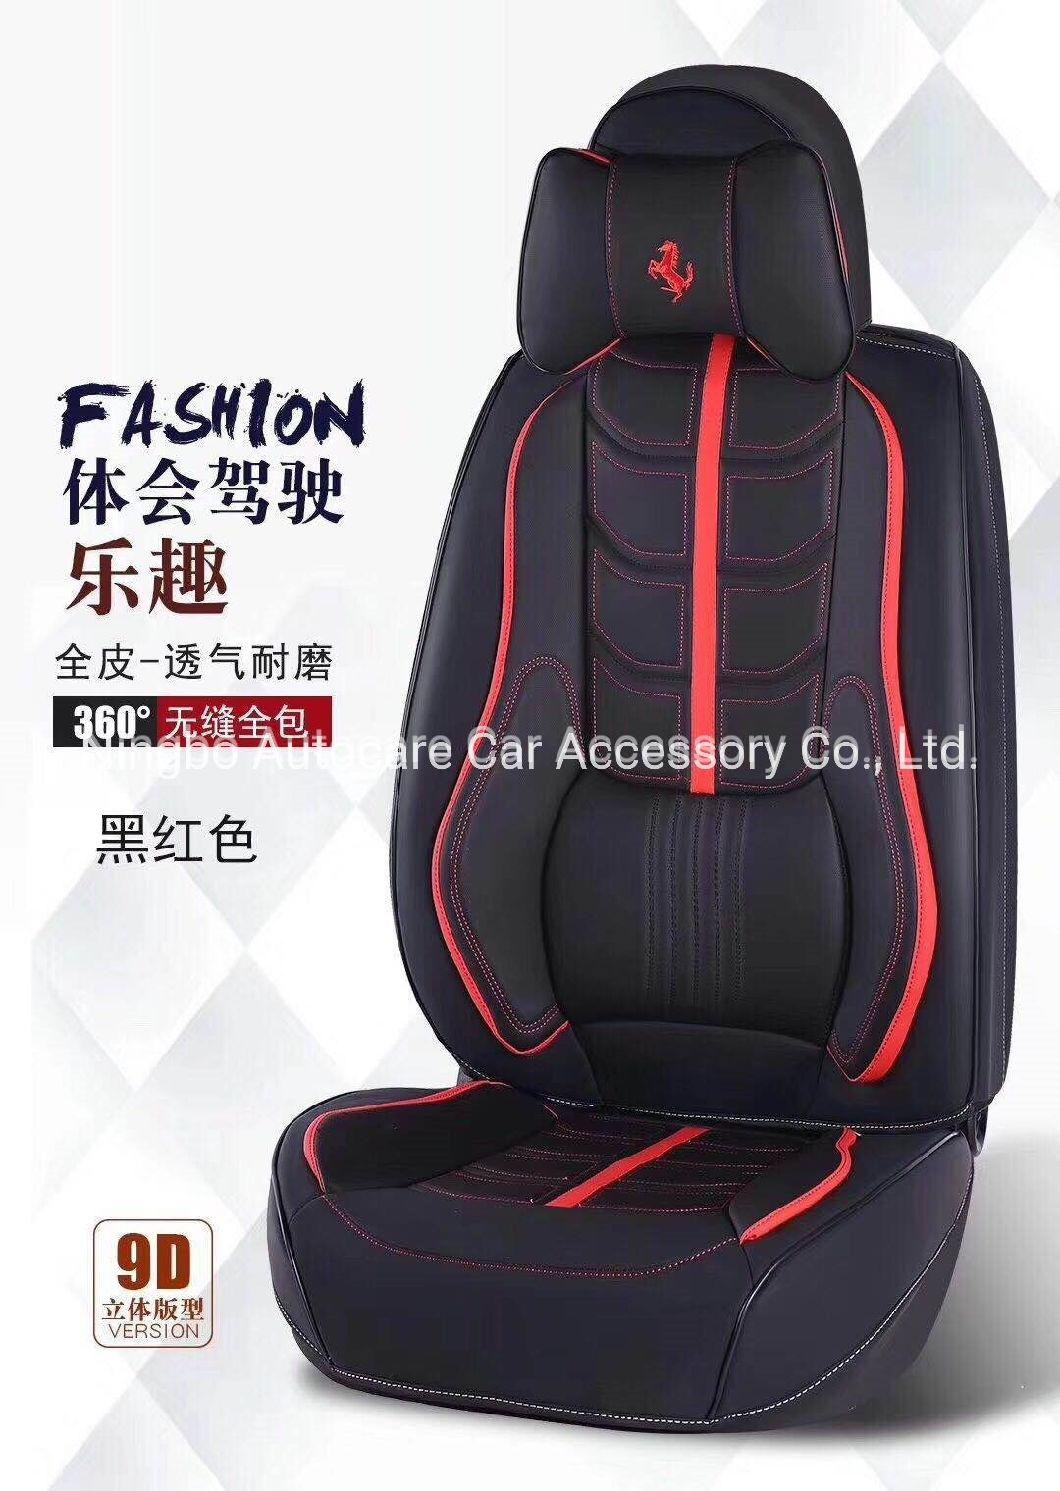 High Quality Car Seat Cover Universal PVC Leather Car Seat Cushion Hottest Fashion Car Decoration